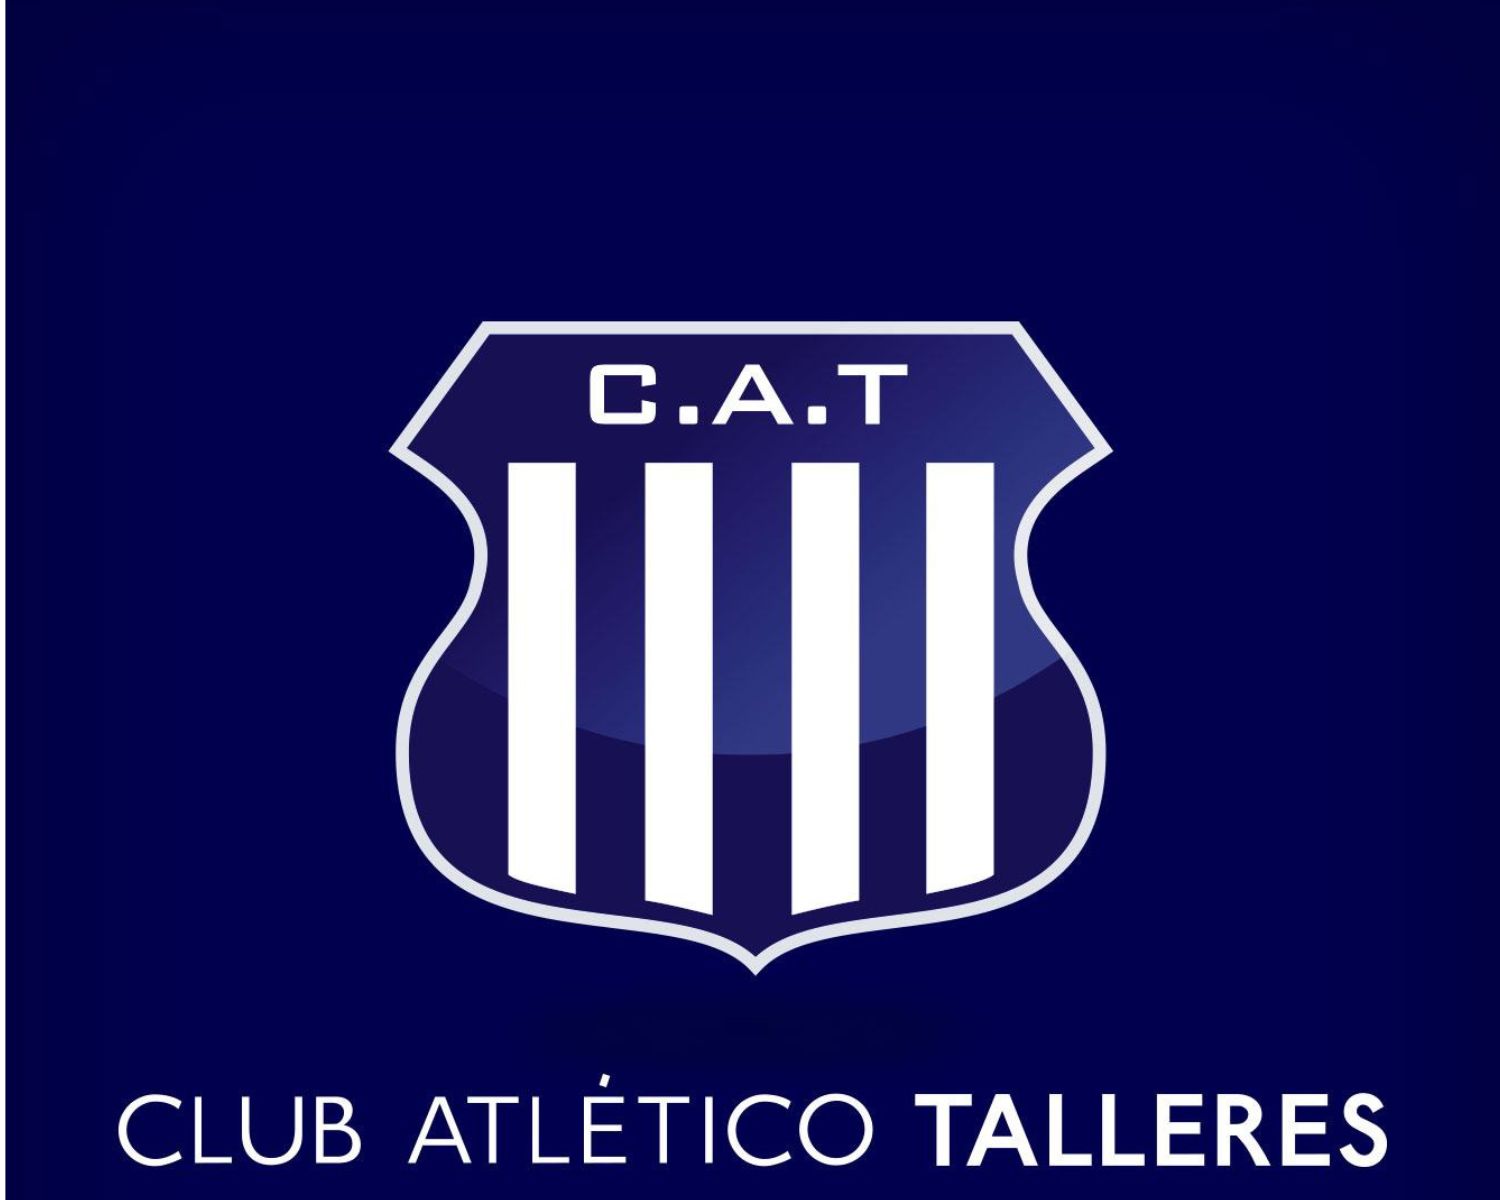 ca-talleres-23-football-club-facts